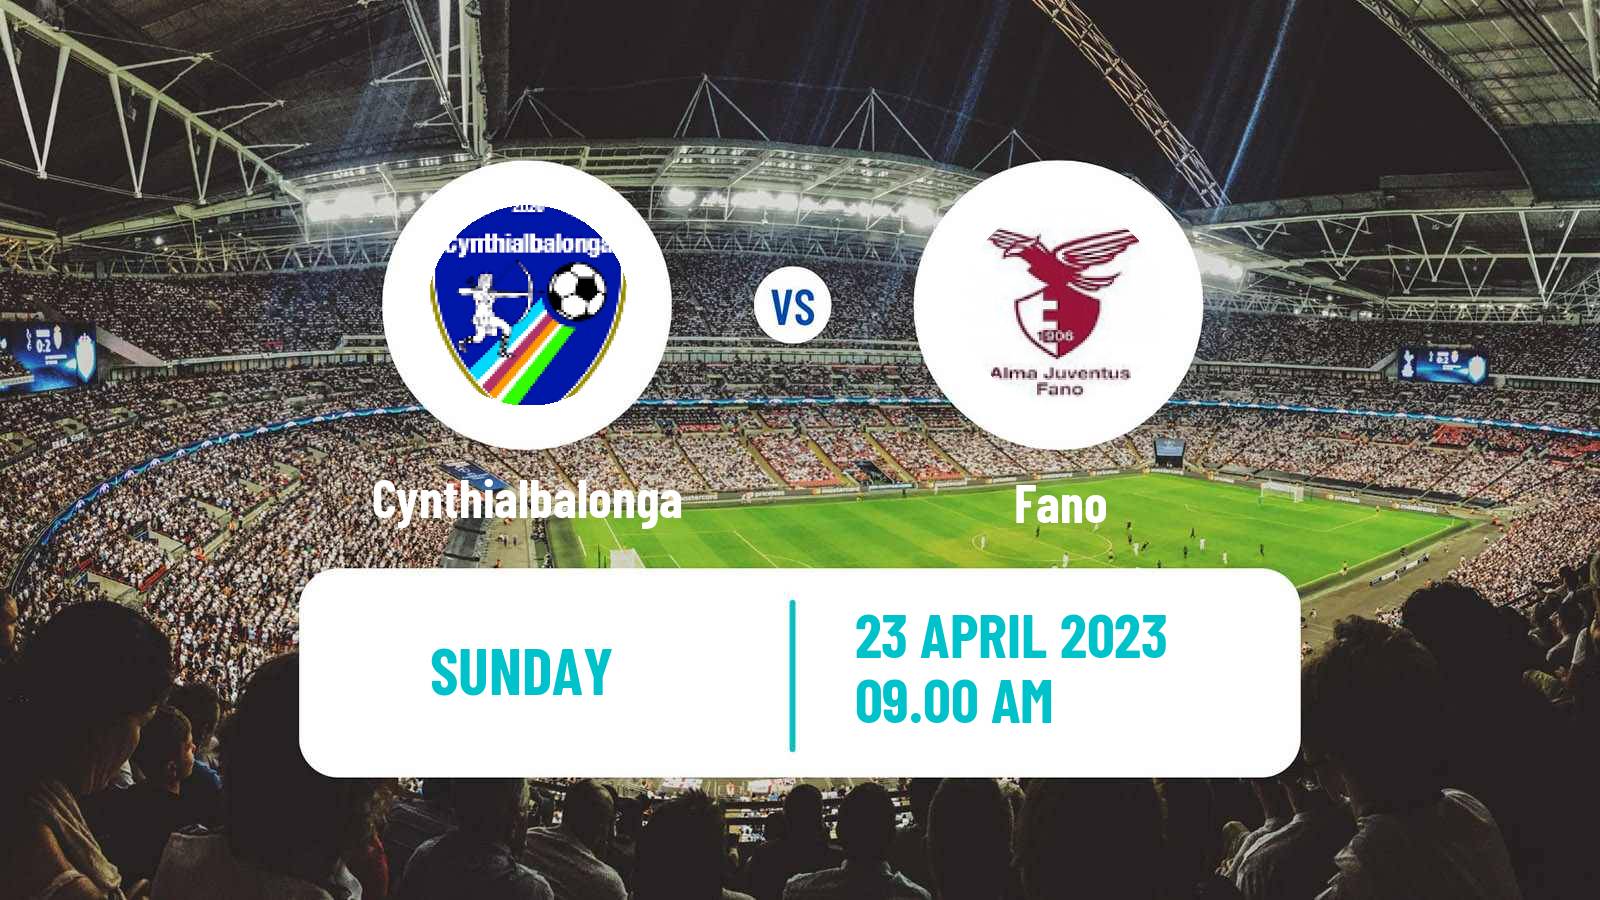 Soccer Italian Serie D - Group F Cynthialbalonga - Fano